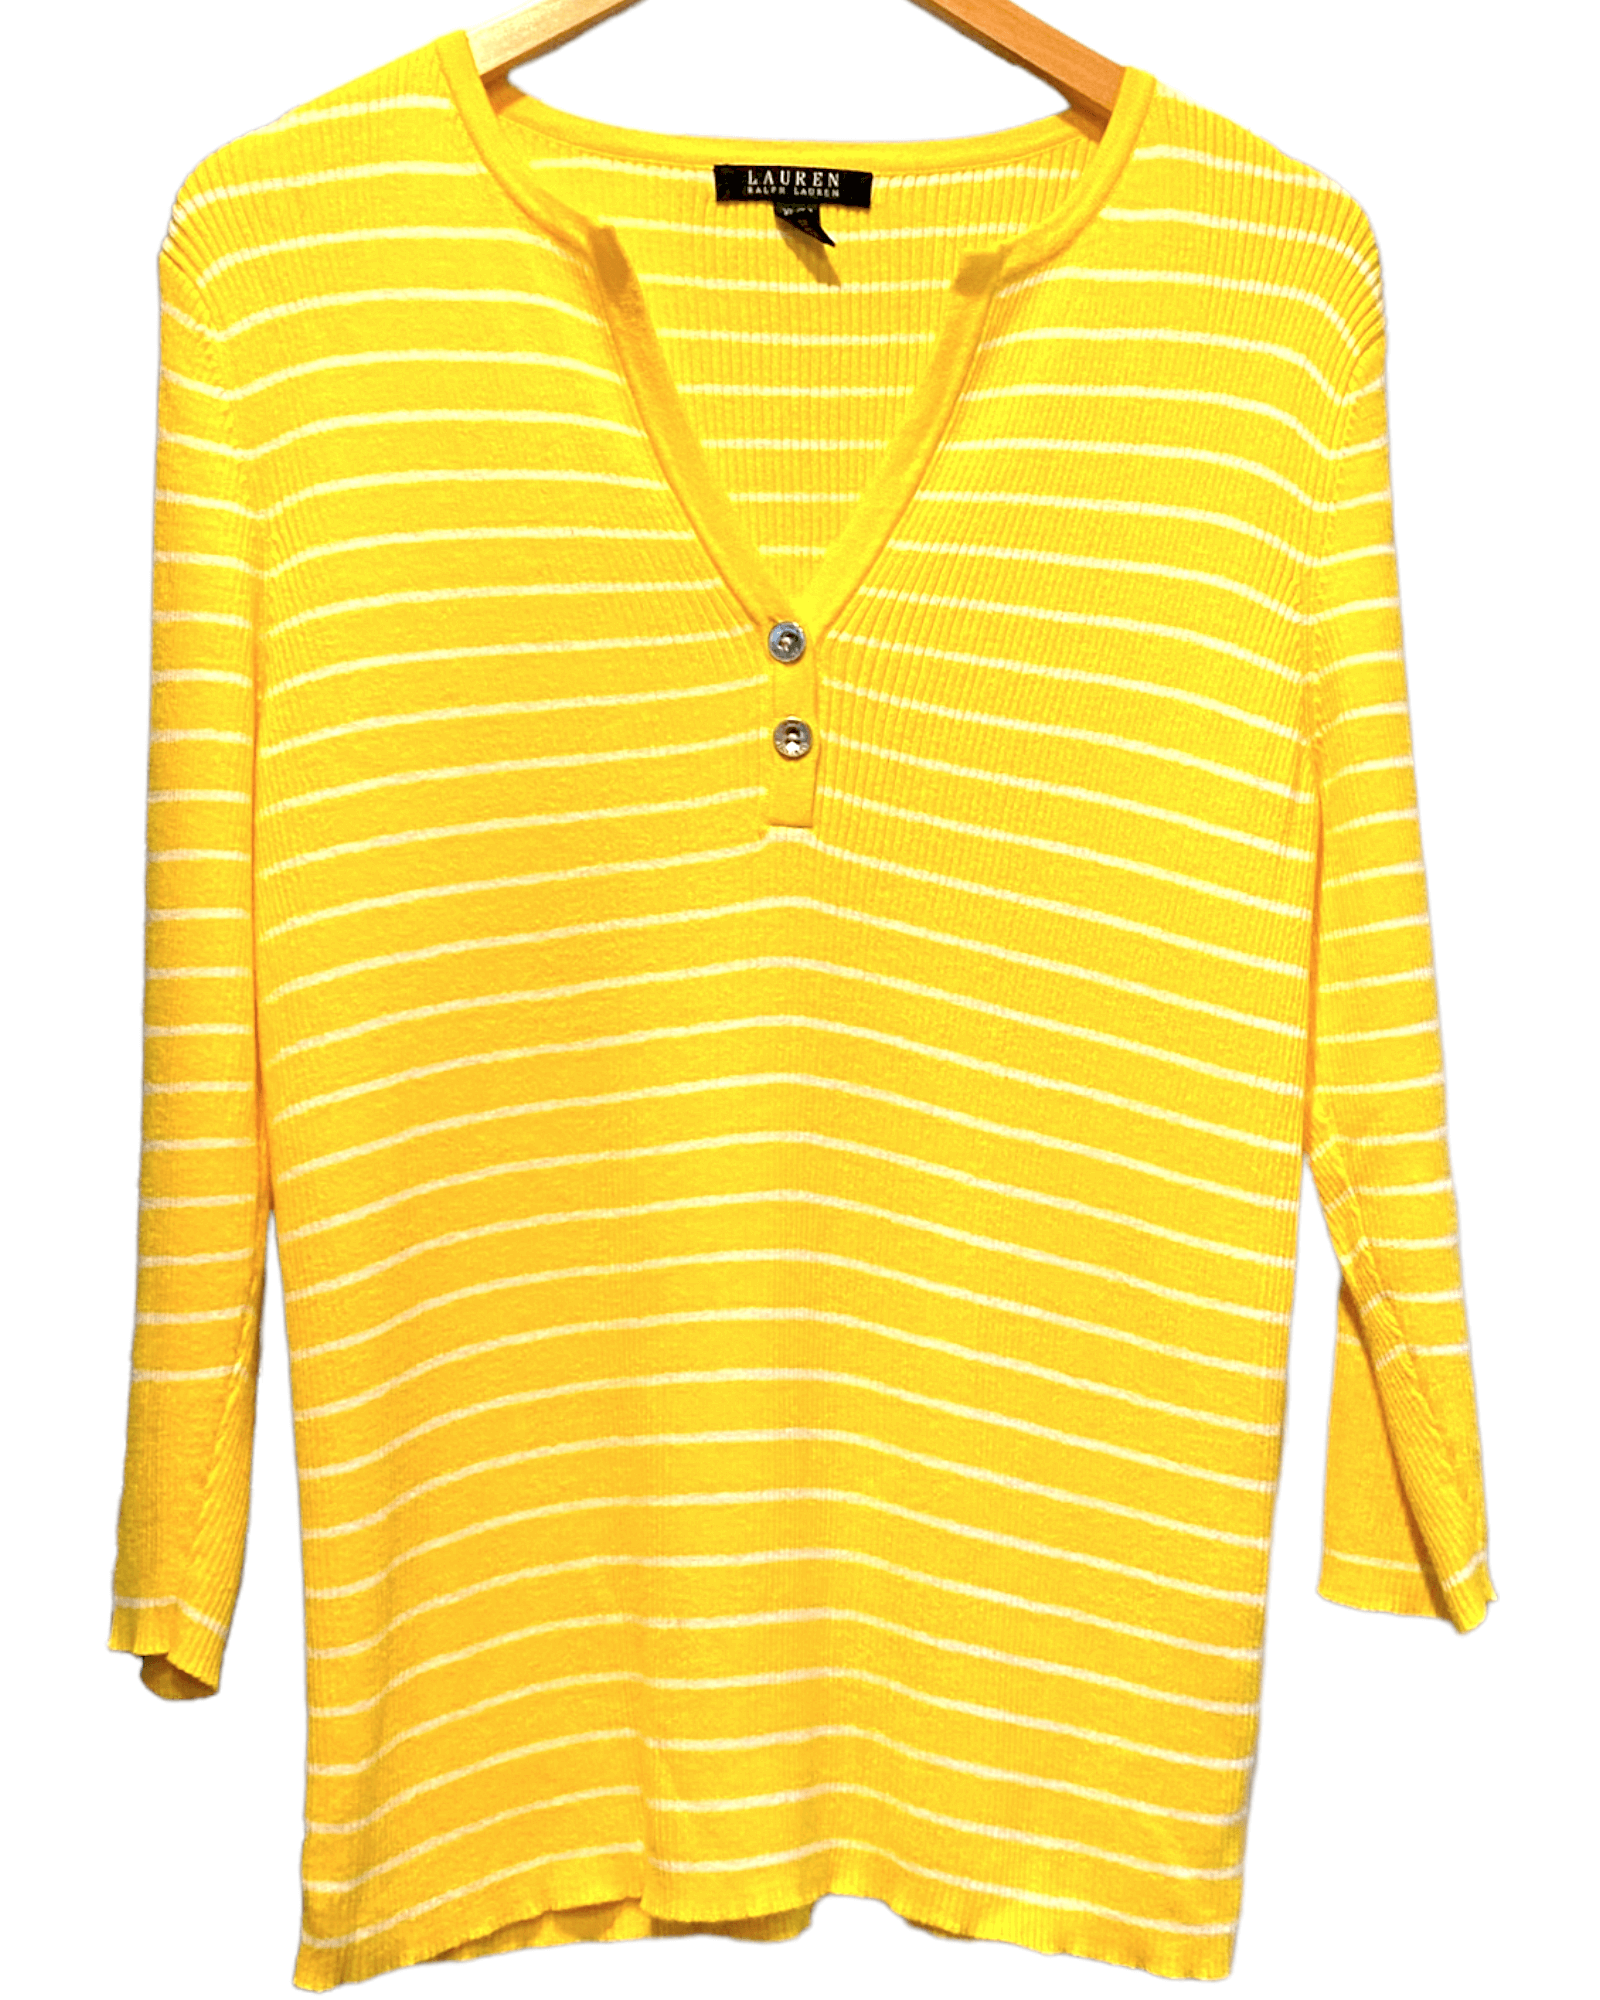 Bright Winter RALPH LAUREN yellow stripe split neck knit top